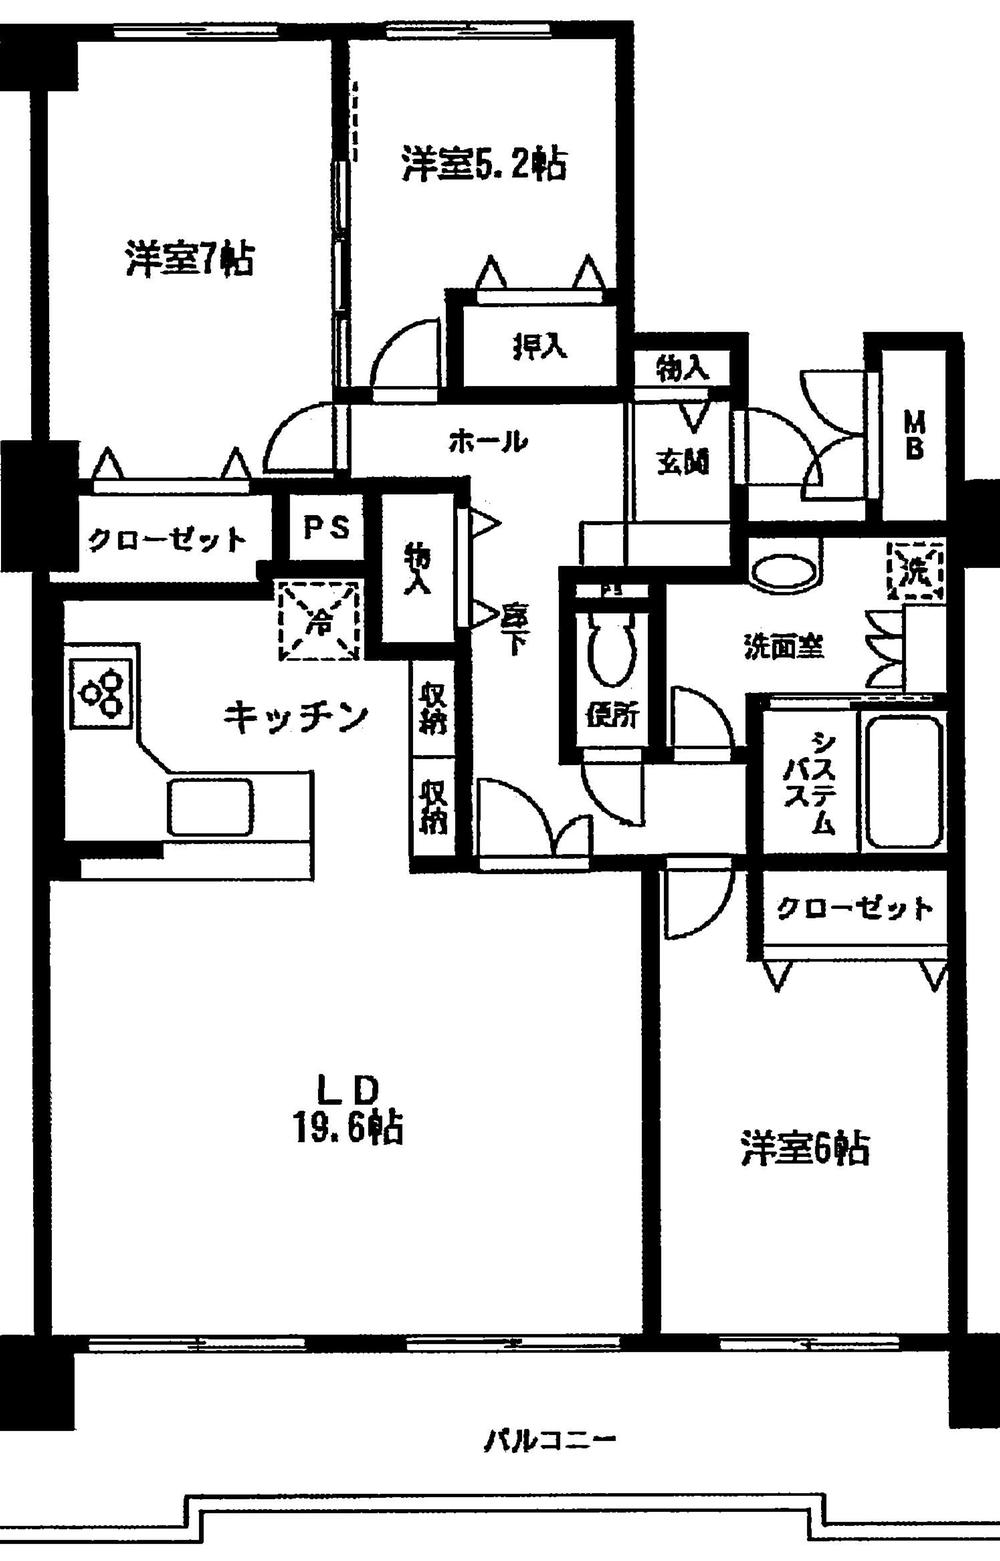 Floor plan. 3LDK, Price 21,800,000 yen, Occupied area 92.15 sq m , Balcony area 16.5 sq m